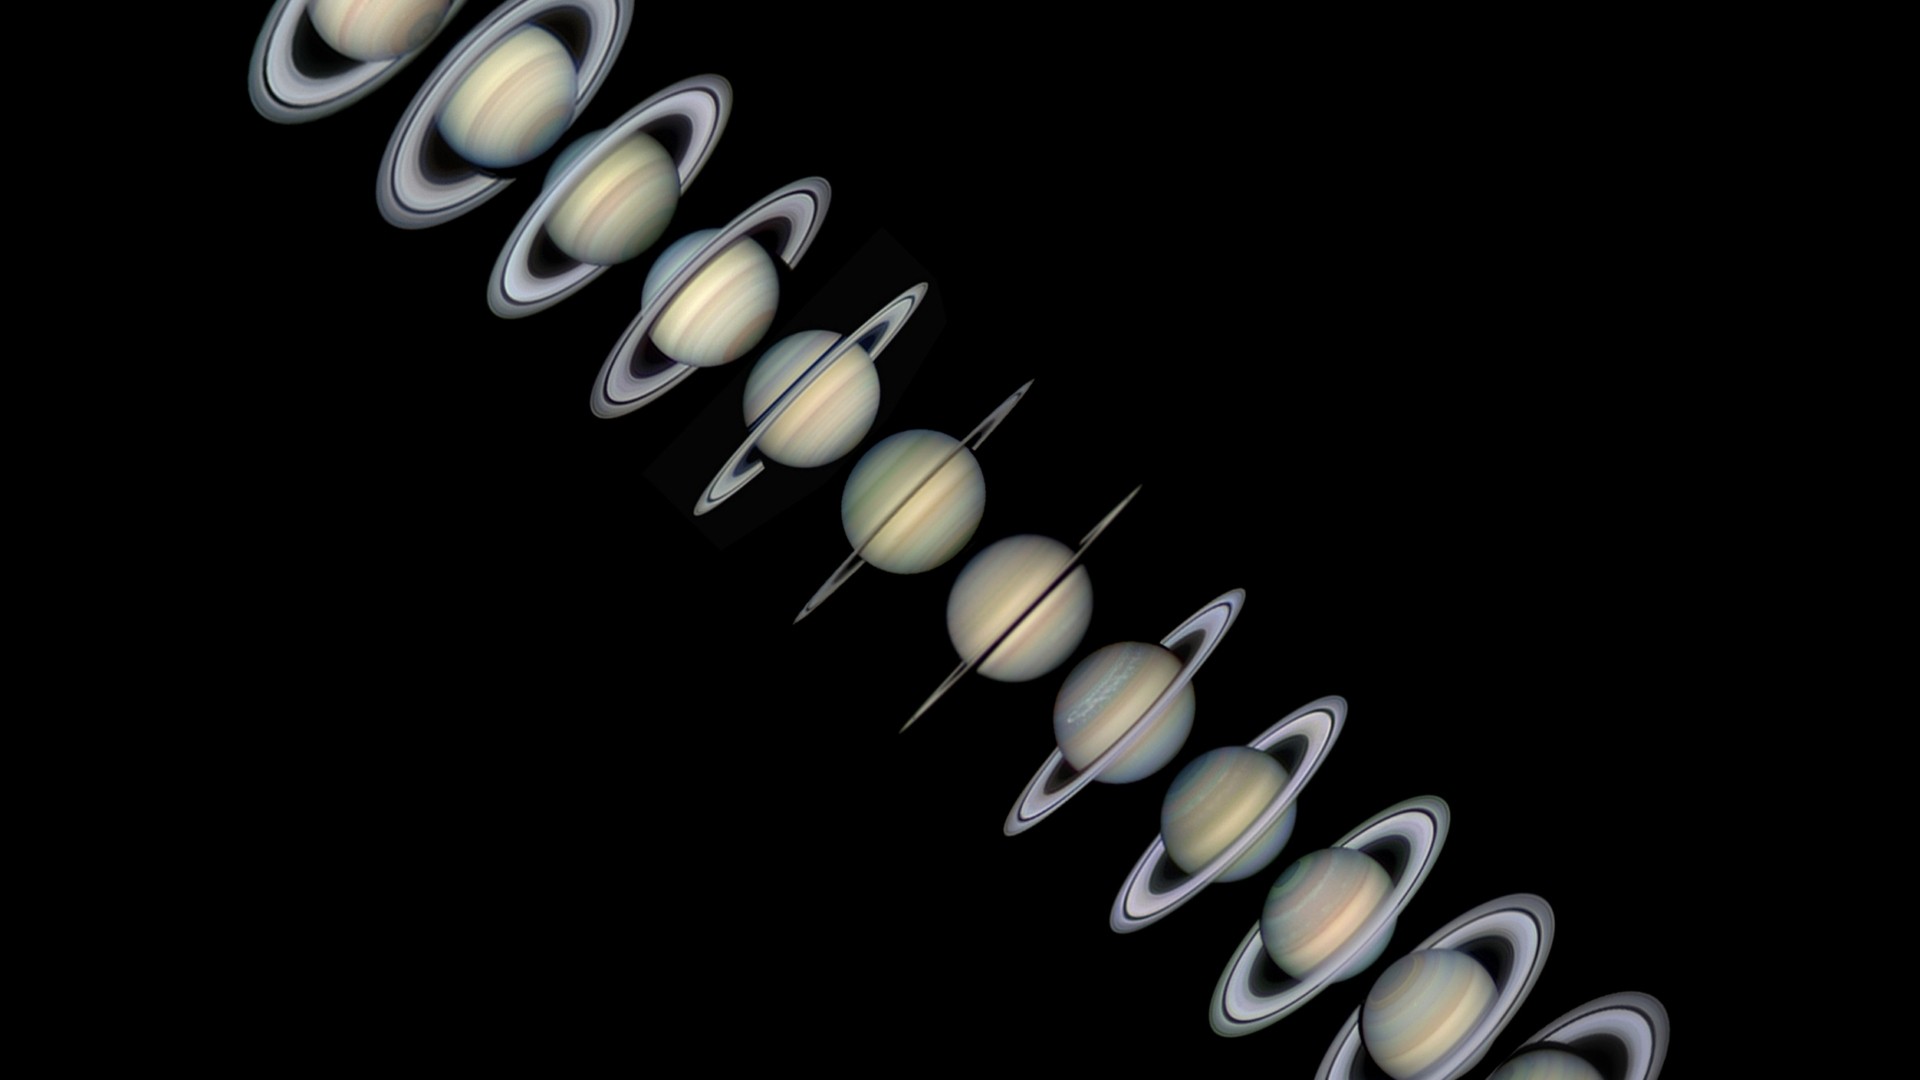 General 1920x1080 space Saturn NASA space art digital art planetary rings